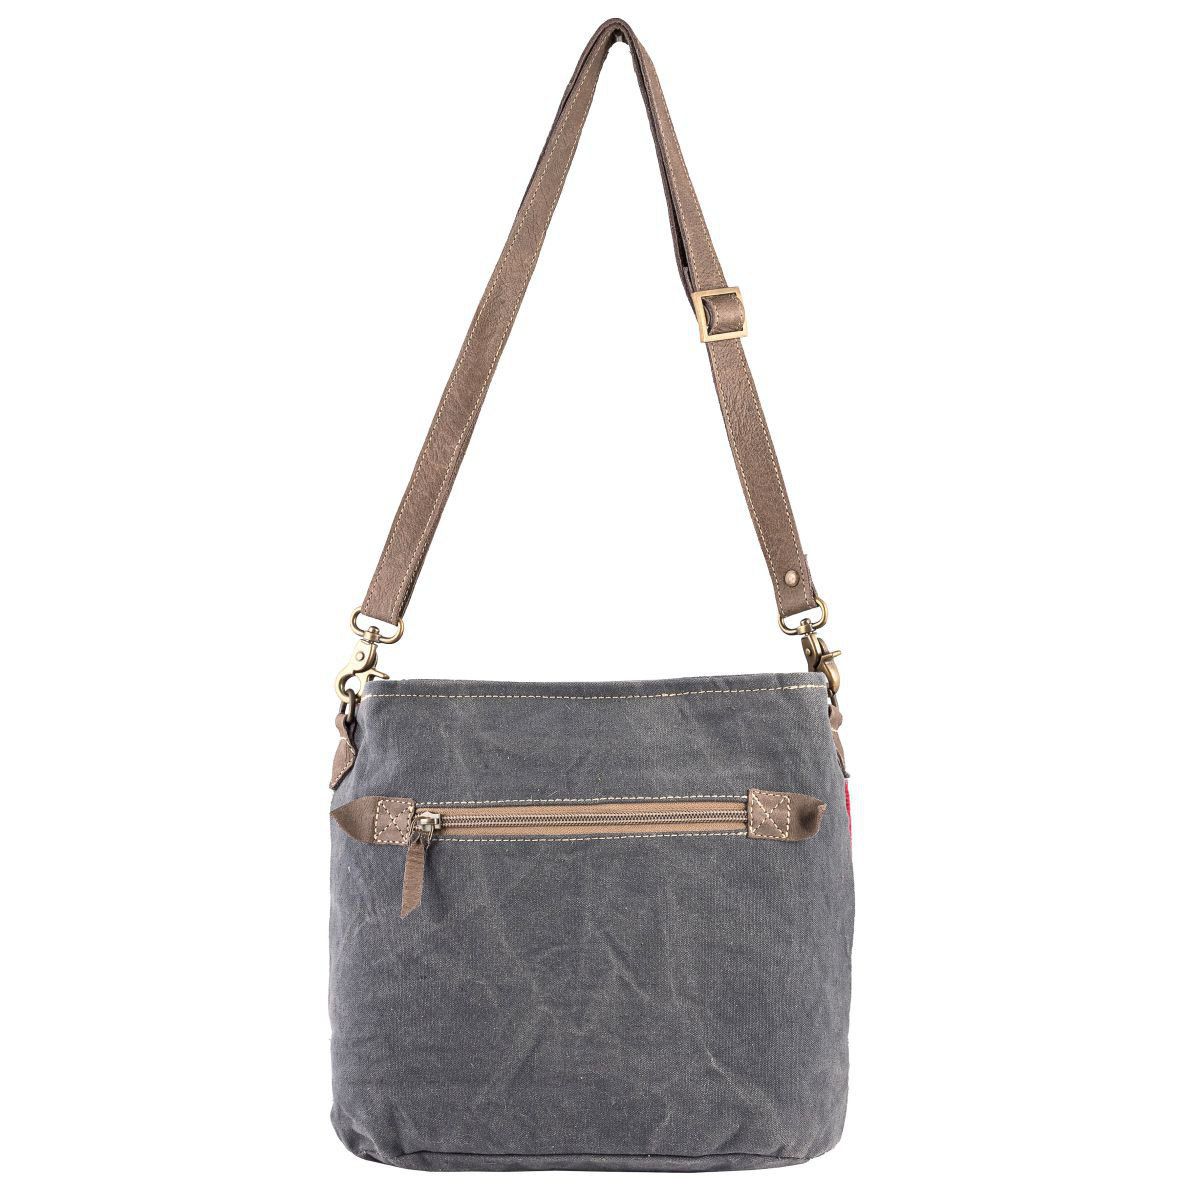 Buy Primrose Bag Online at Wholesale Price | Sixtease Bags